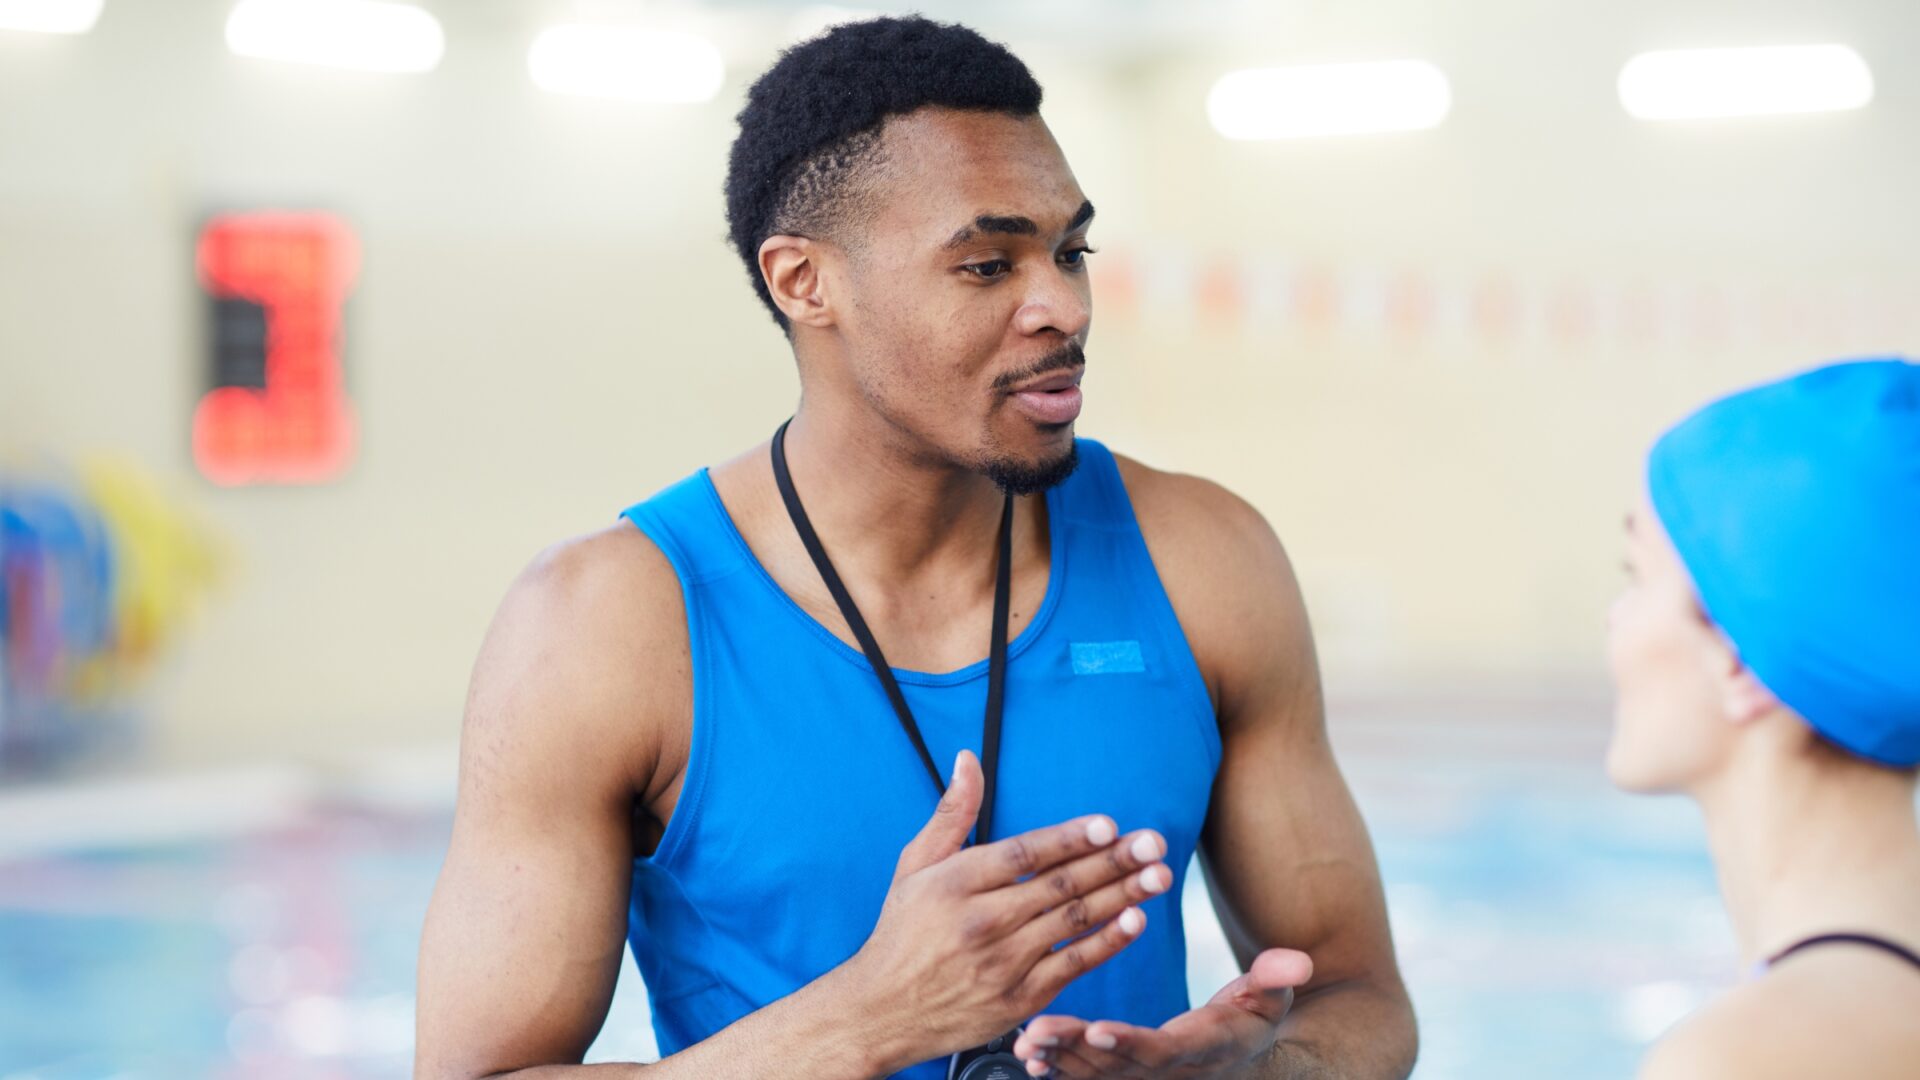 A swim coach speaking to his athlete